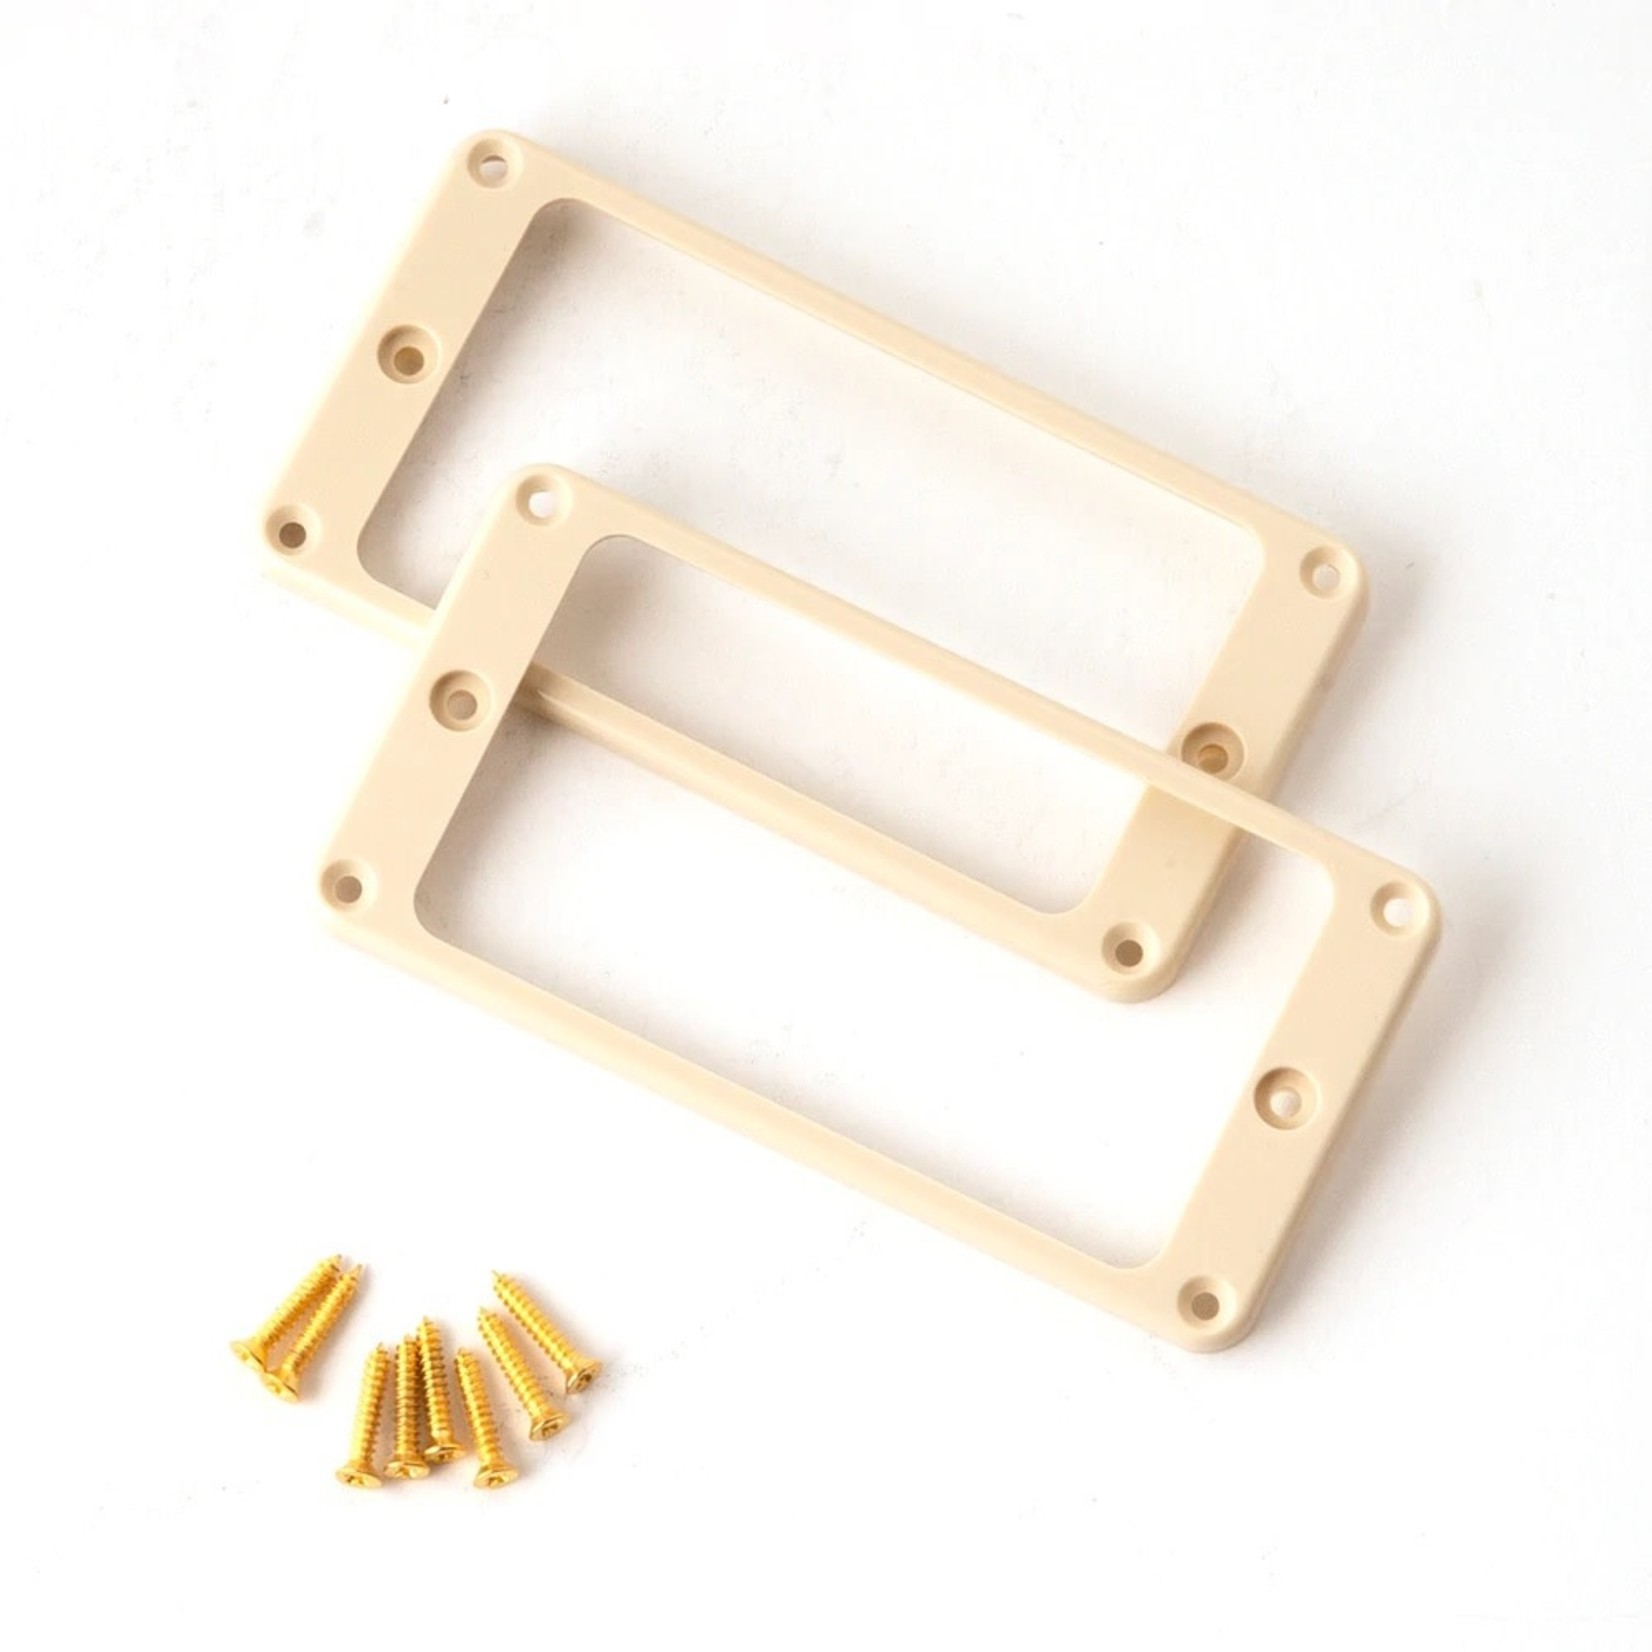 Paul Reed Smith PRS Humbucker Pickup Rings (2), Universal Angle, "Ivory" (All models)